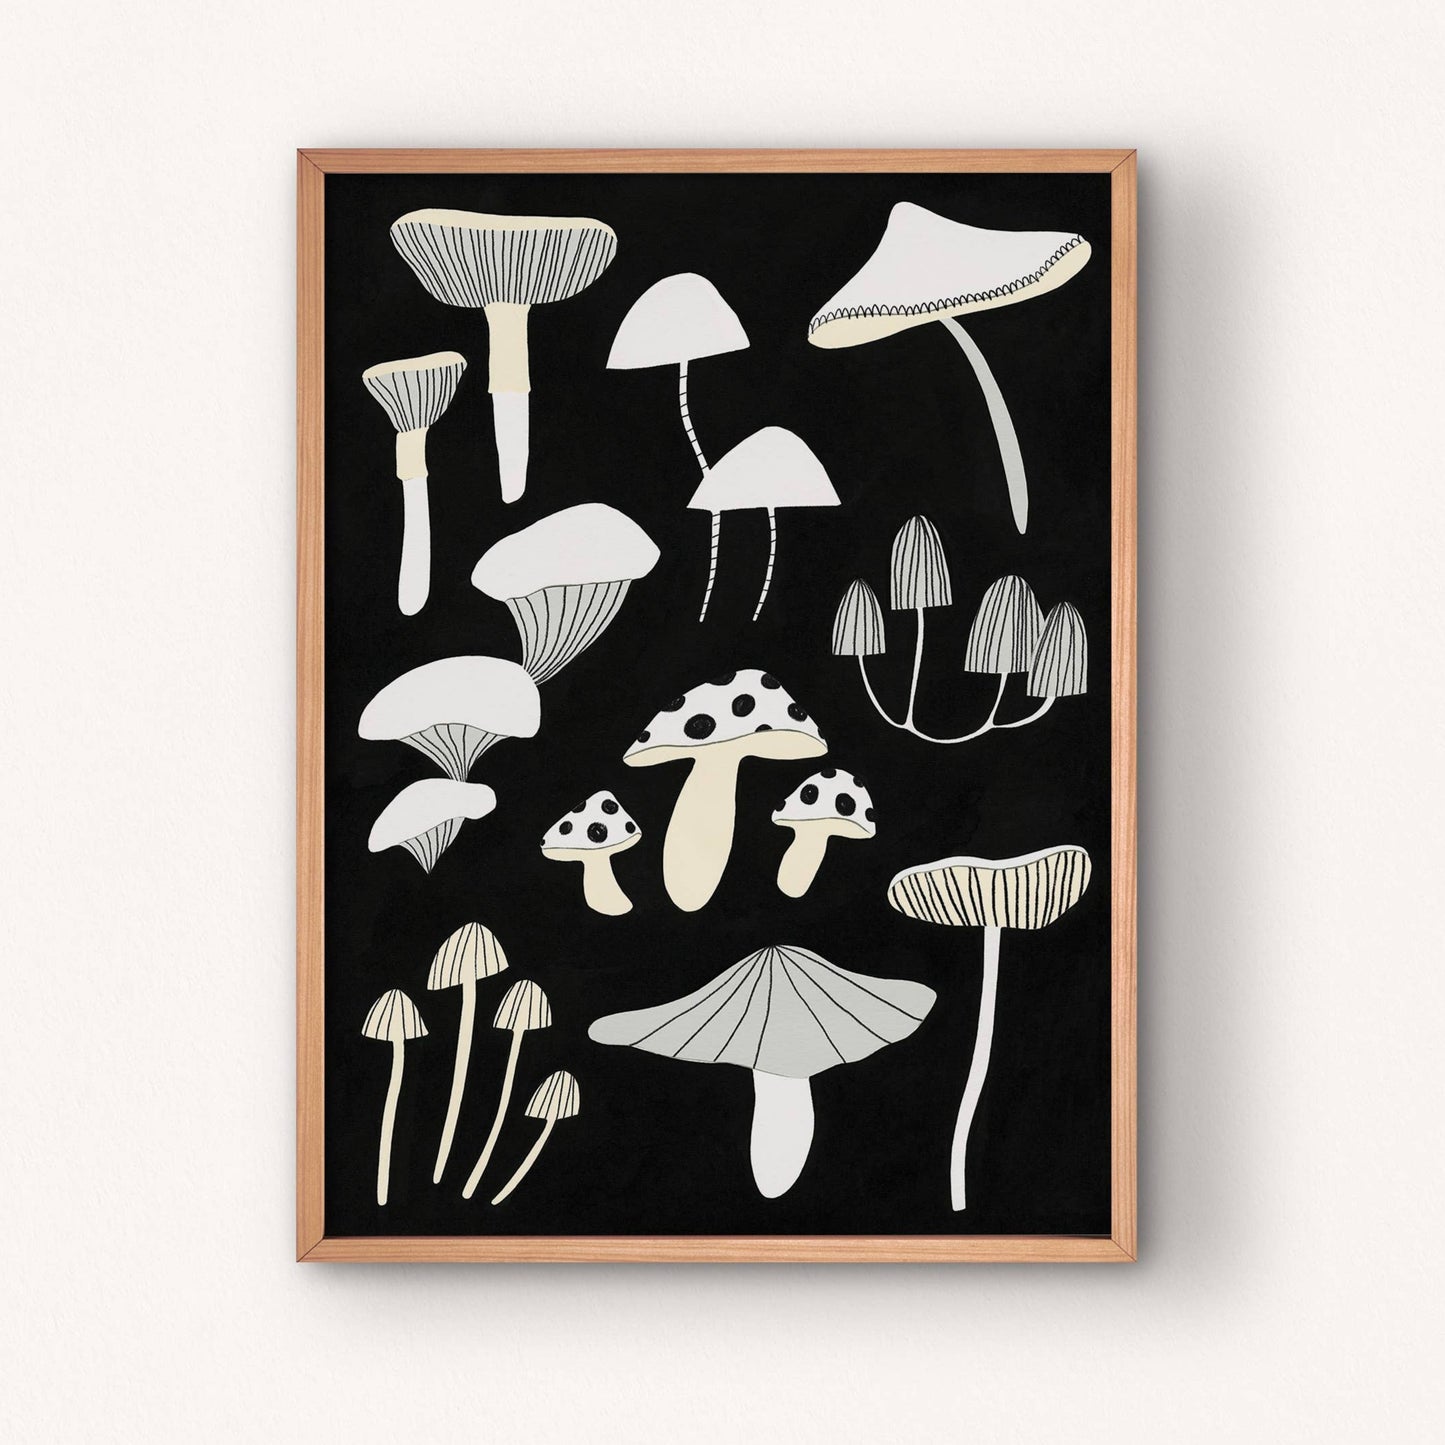 Black and White Mushroom Print